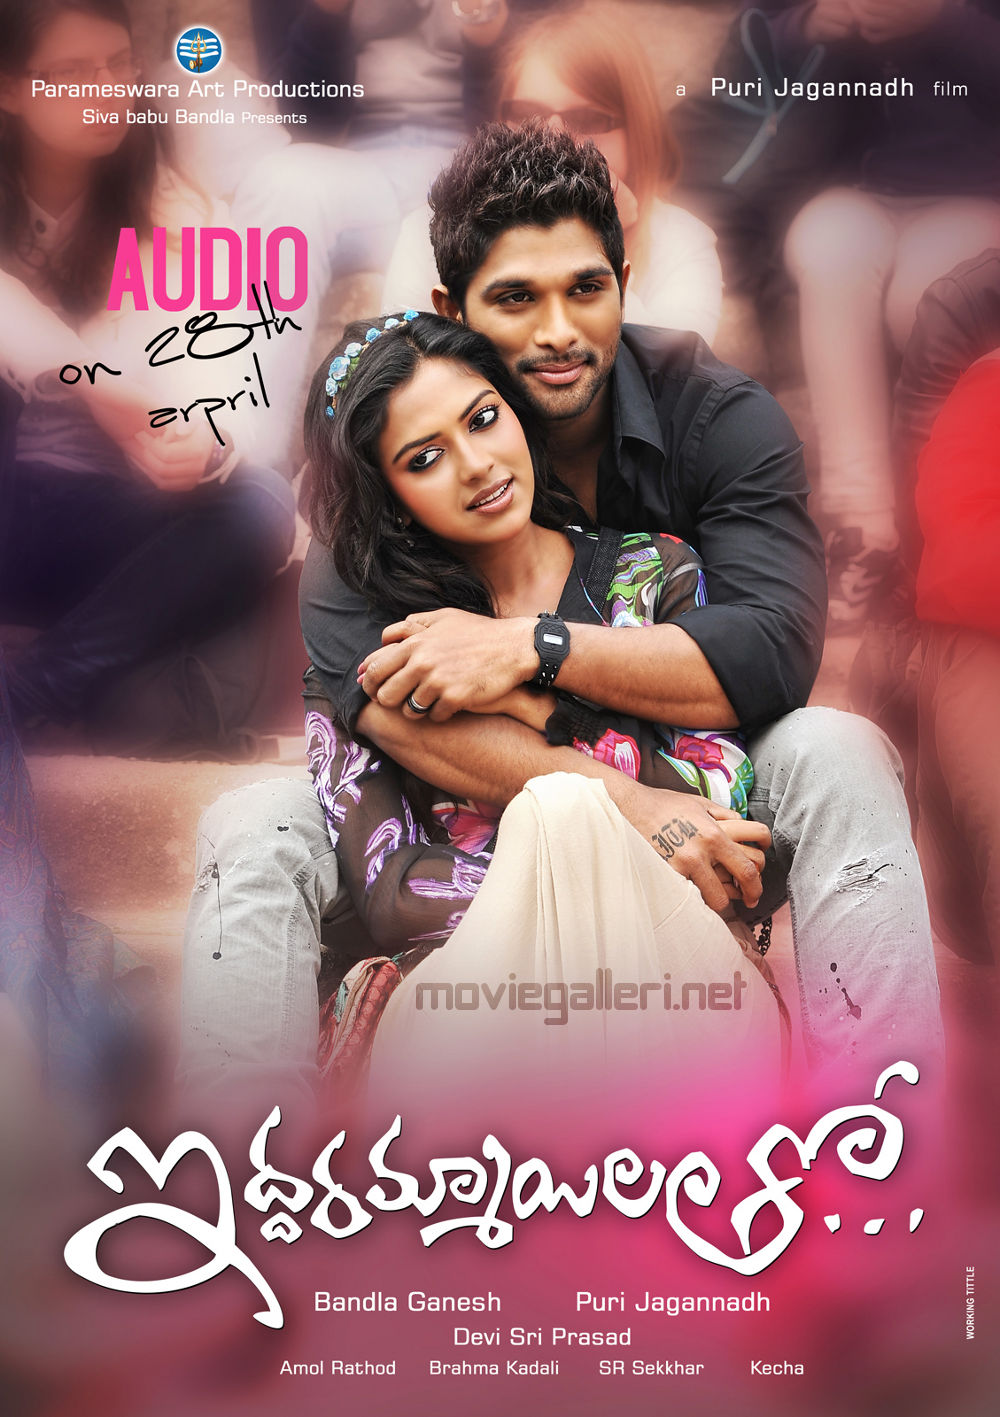 http://moviegalleri.net/wp-content/uploads/2013/04/allu_arjun_amala_paul_iddarammayilatho_audio_songs_launch_poster.jpg